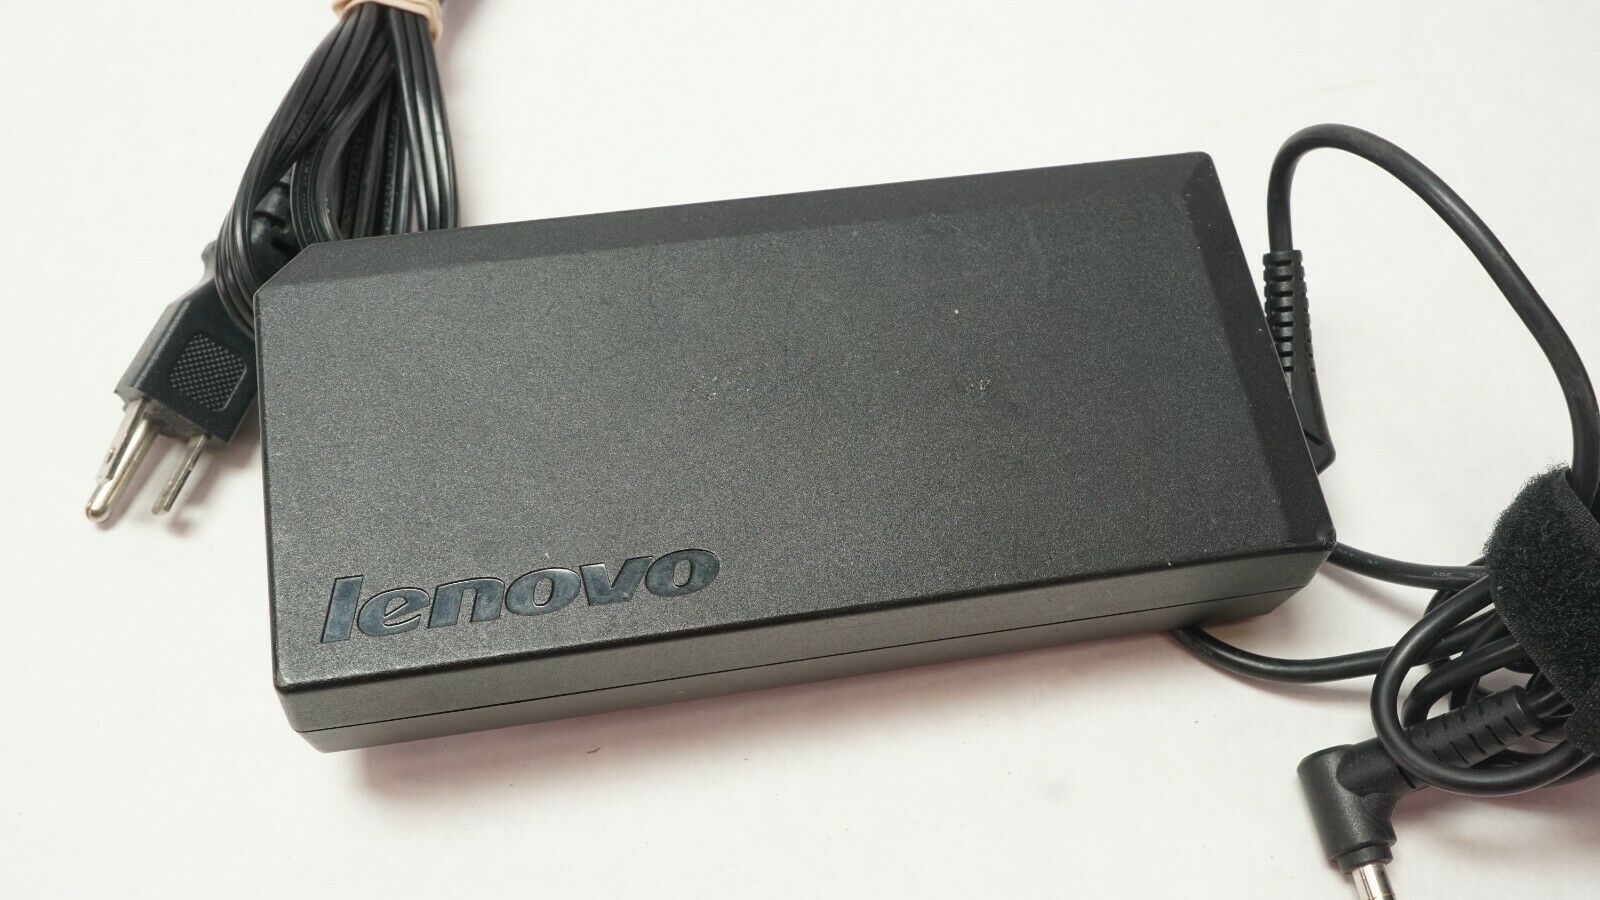 Original Lenovo ideapad Y510P SLI 20V 8.5A Charger 170W (5.5mm * 2.5mm)